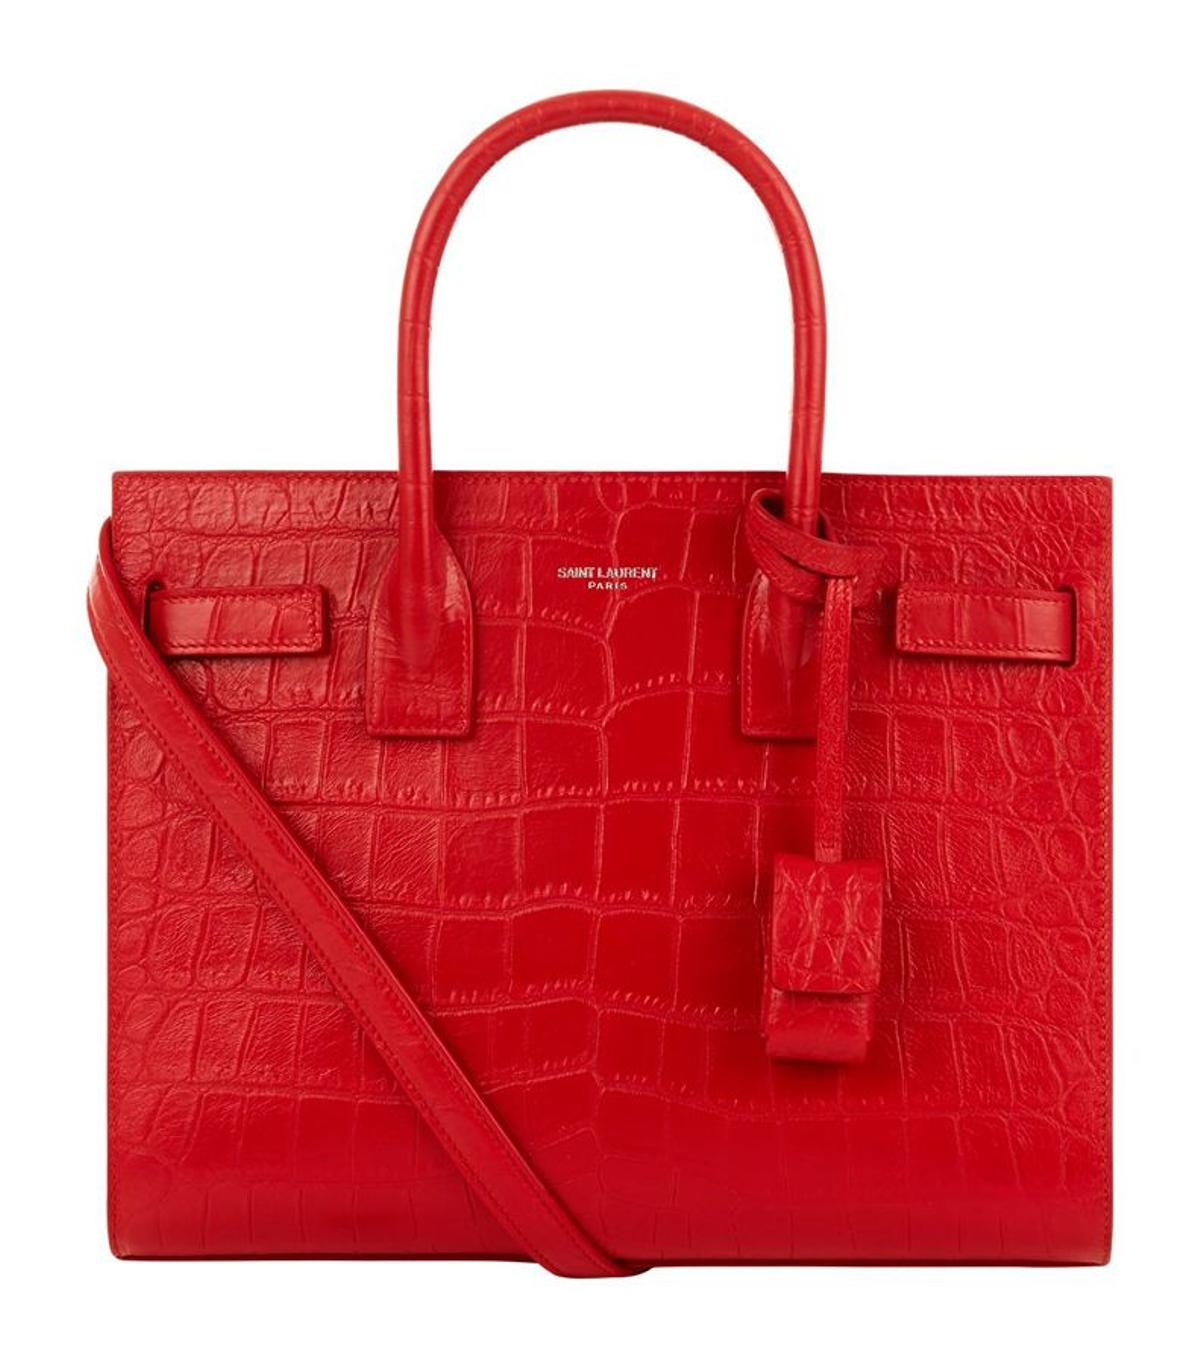 El look de Olivia Culpo: bolso de cuero rojo de Saint Laurent